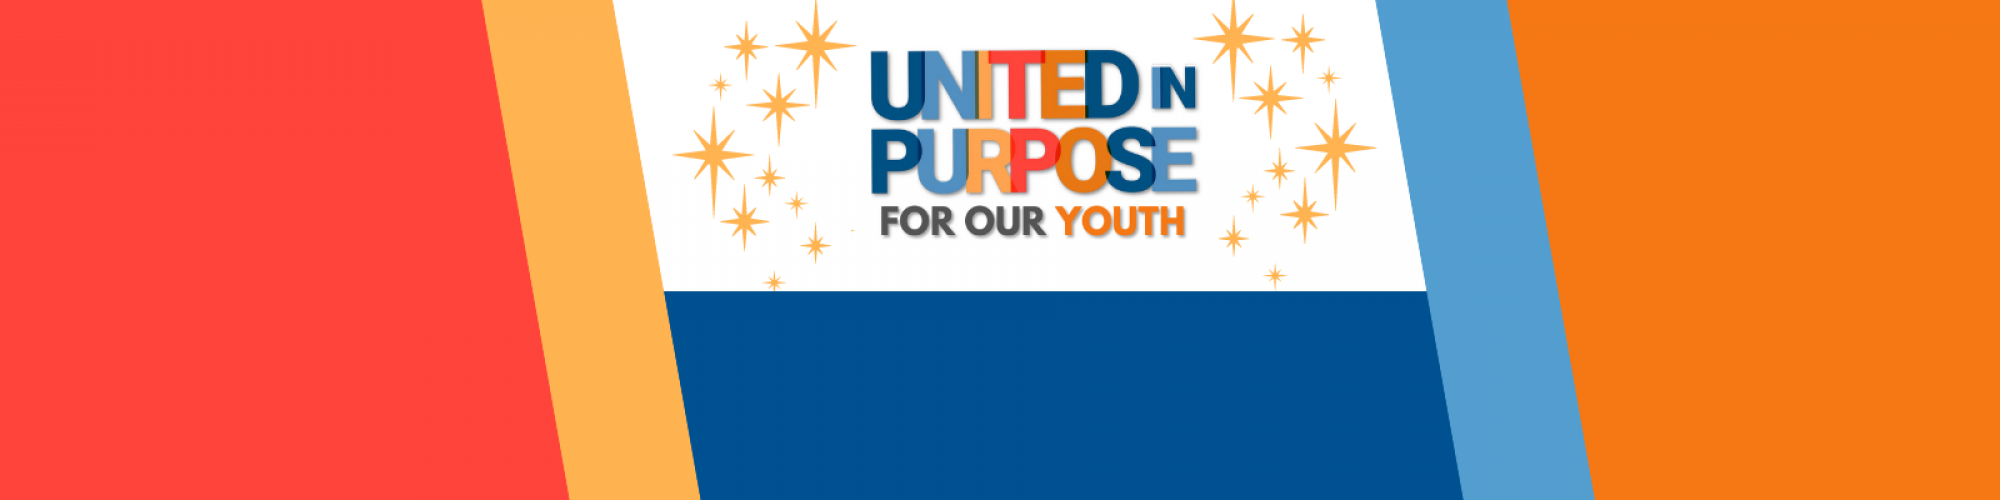 United in Purpose - Annual Meeting & Awards Breakfast 